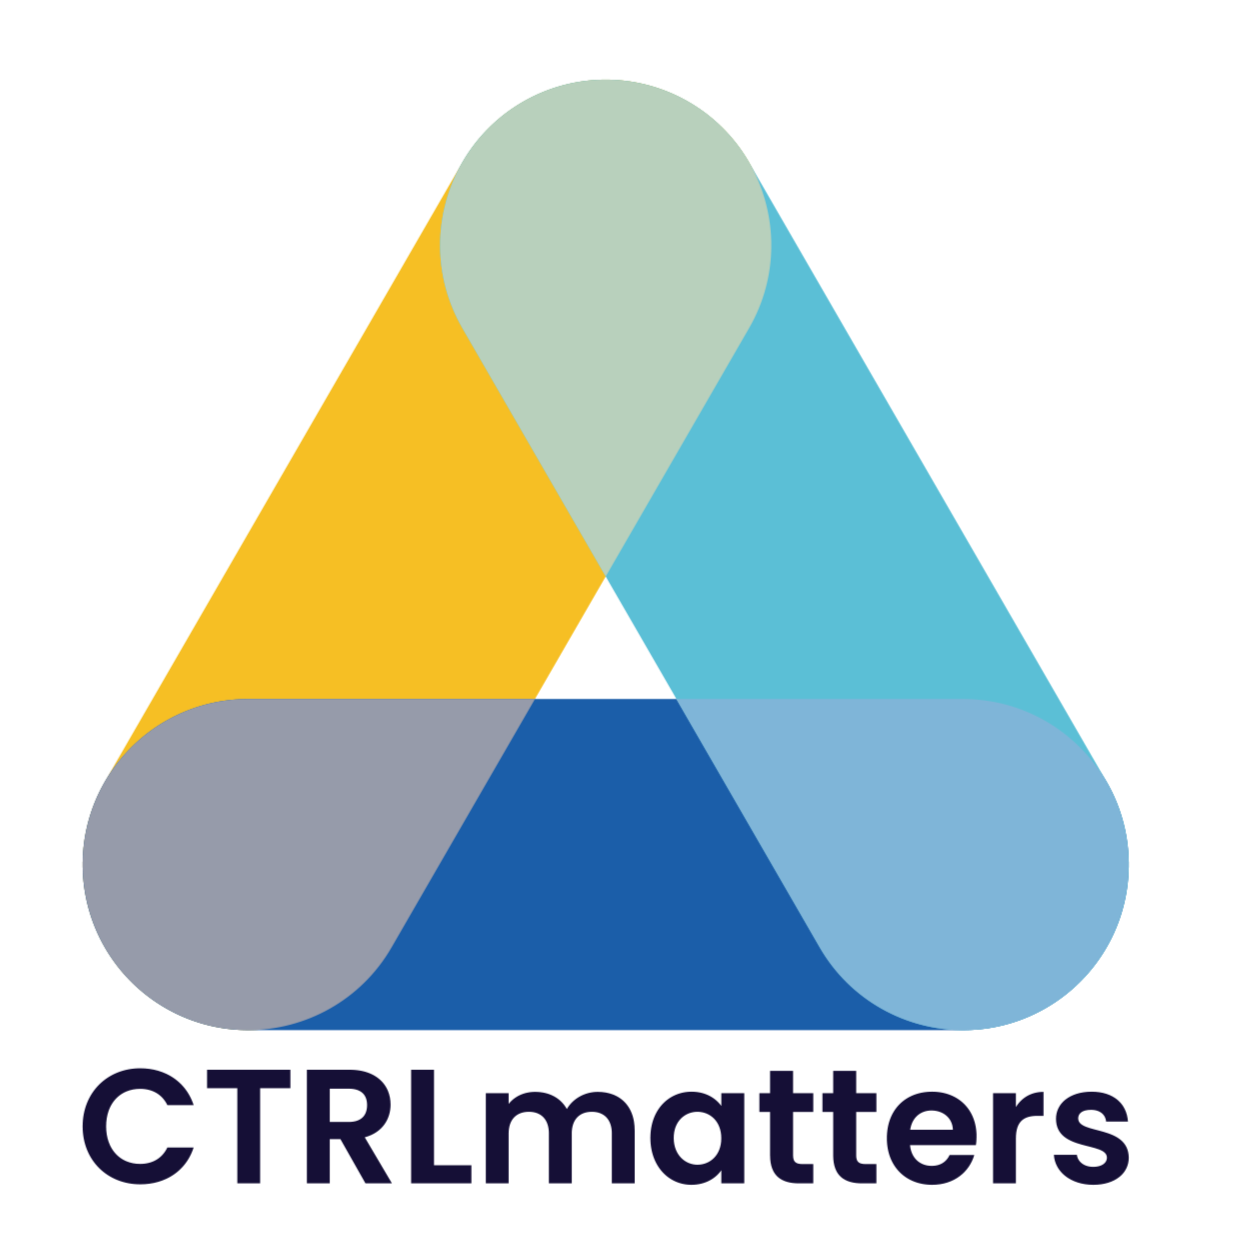 CTRLmatters